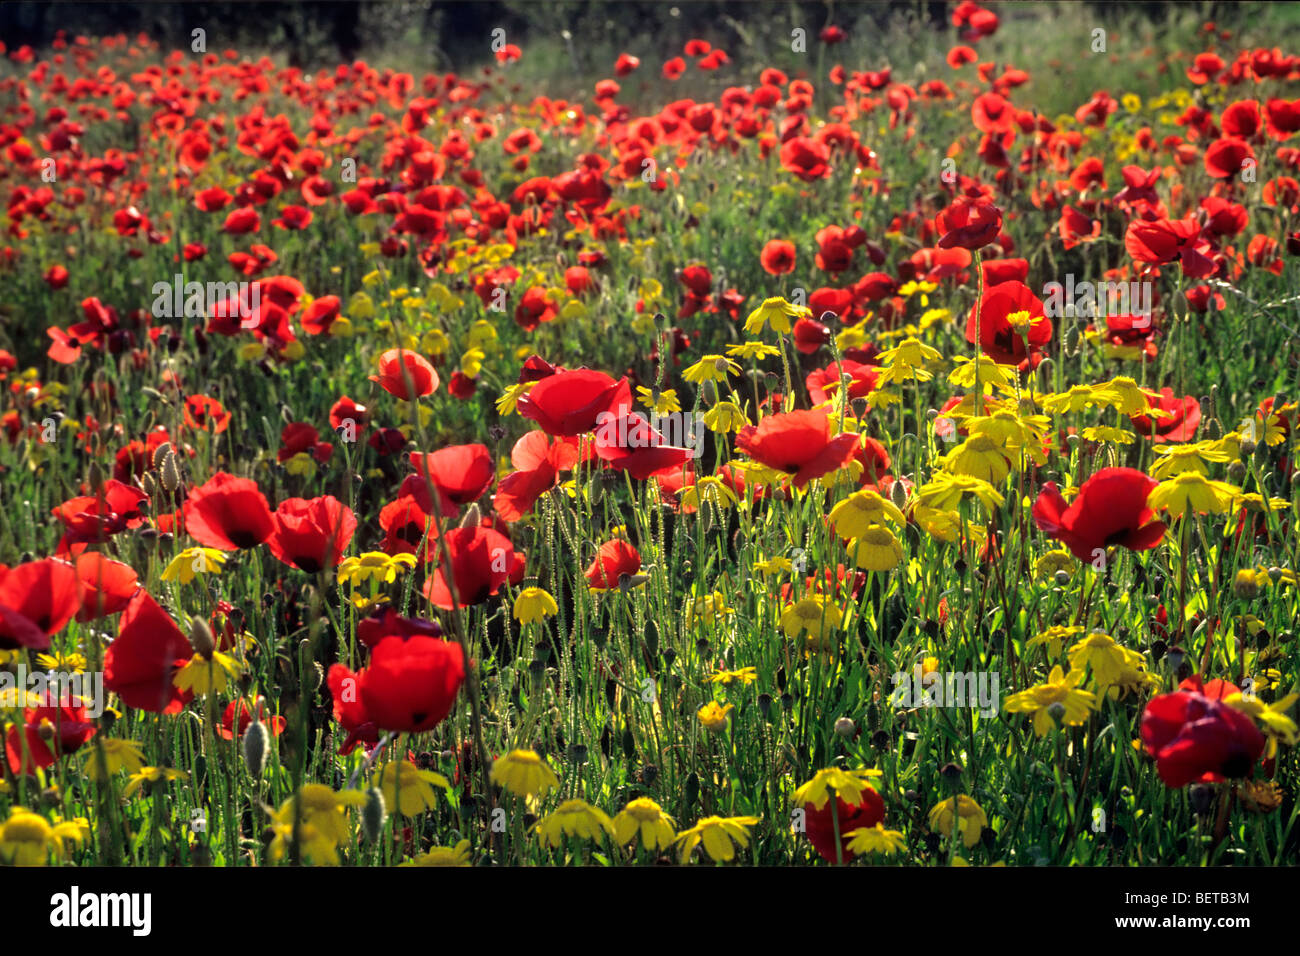 Field with wildflowers like poppies (Papaver rhoeas) and corn marigolds (Chrysanthemum segetum), Tuscany, Italy Stock Photo